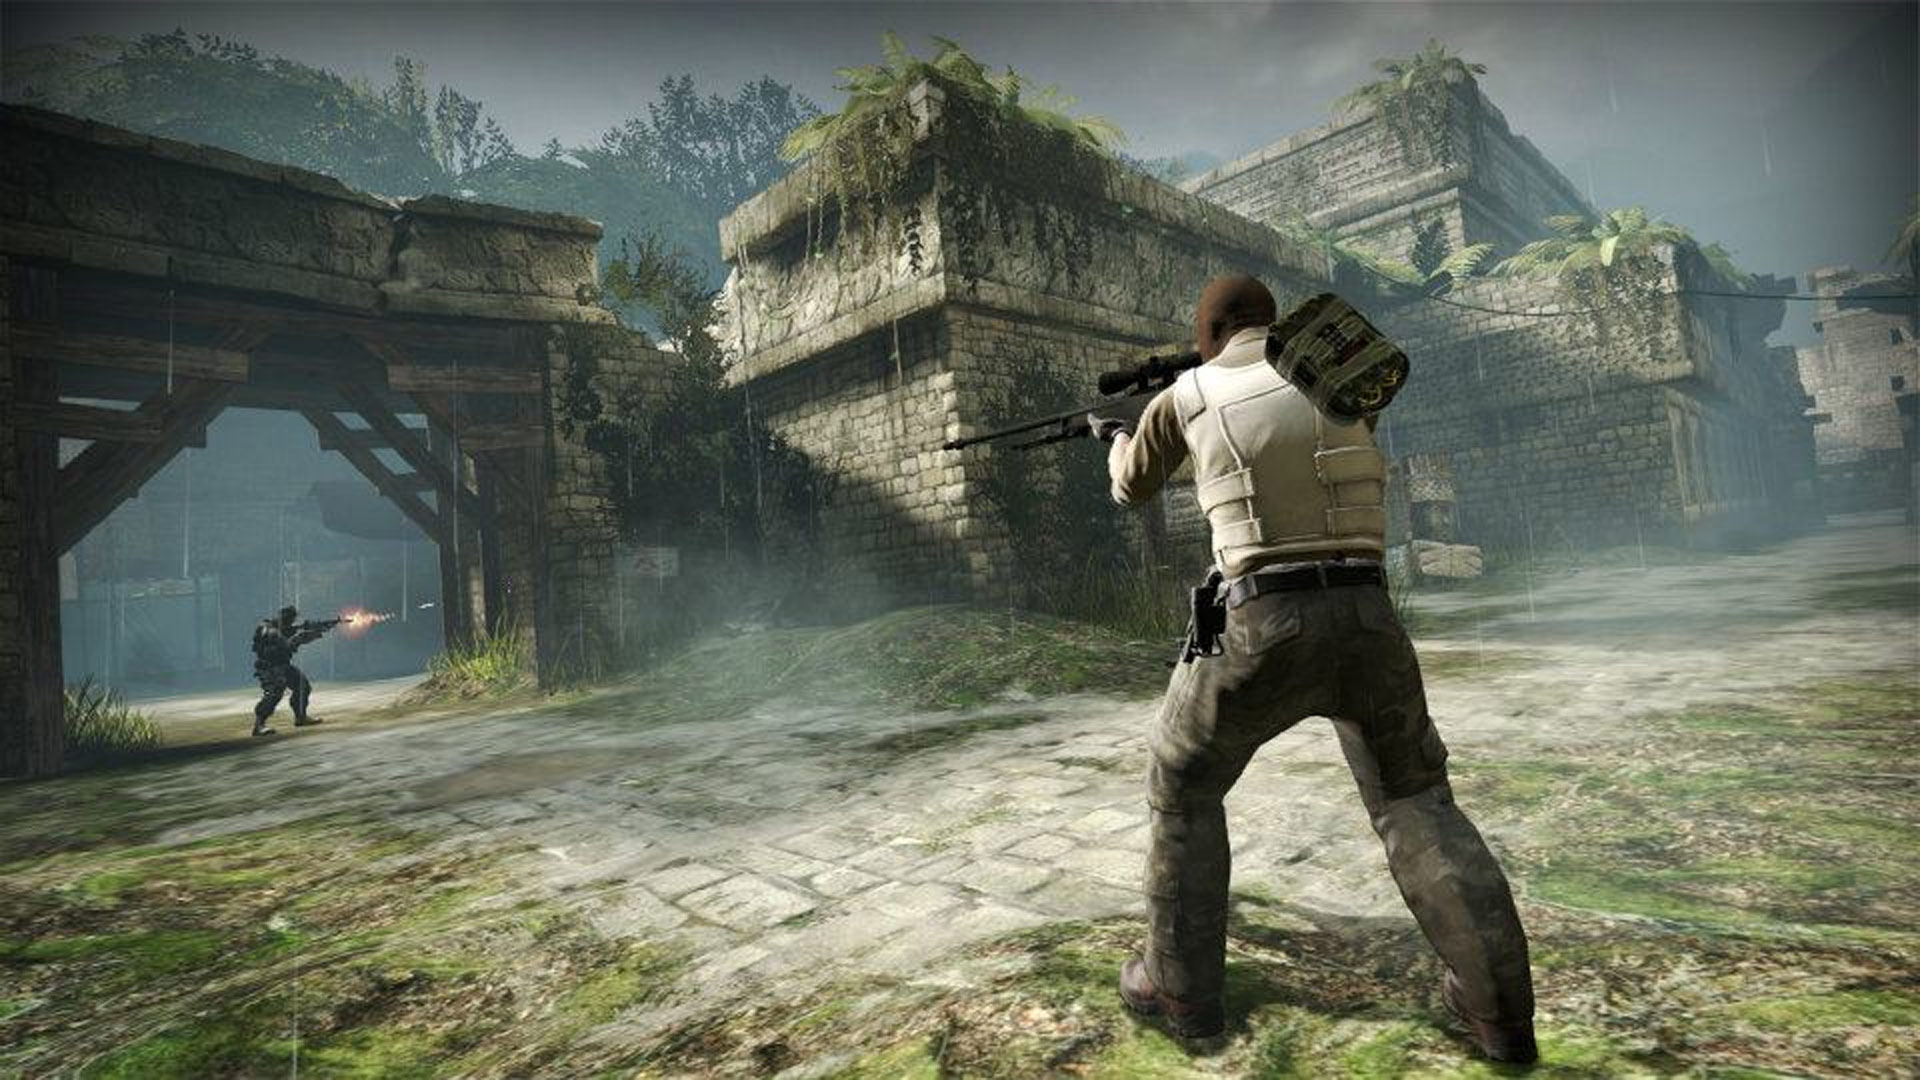 Counter Strike Global Offensive Screenshot